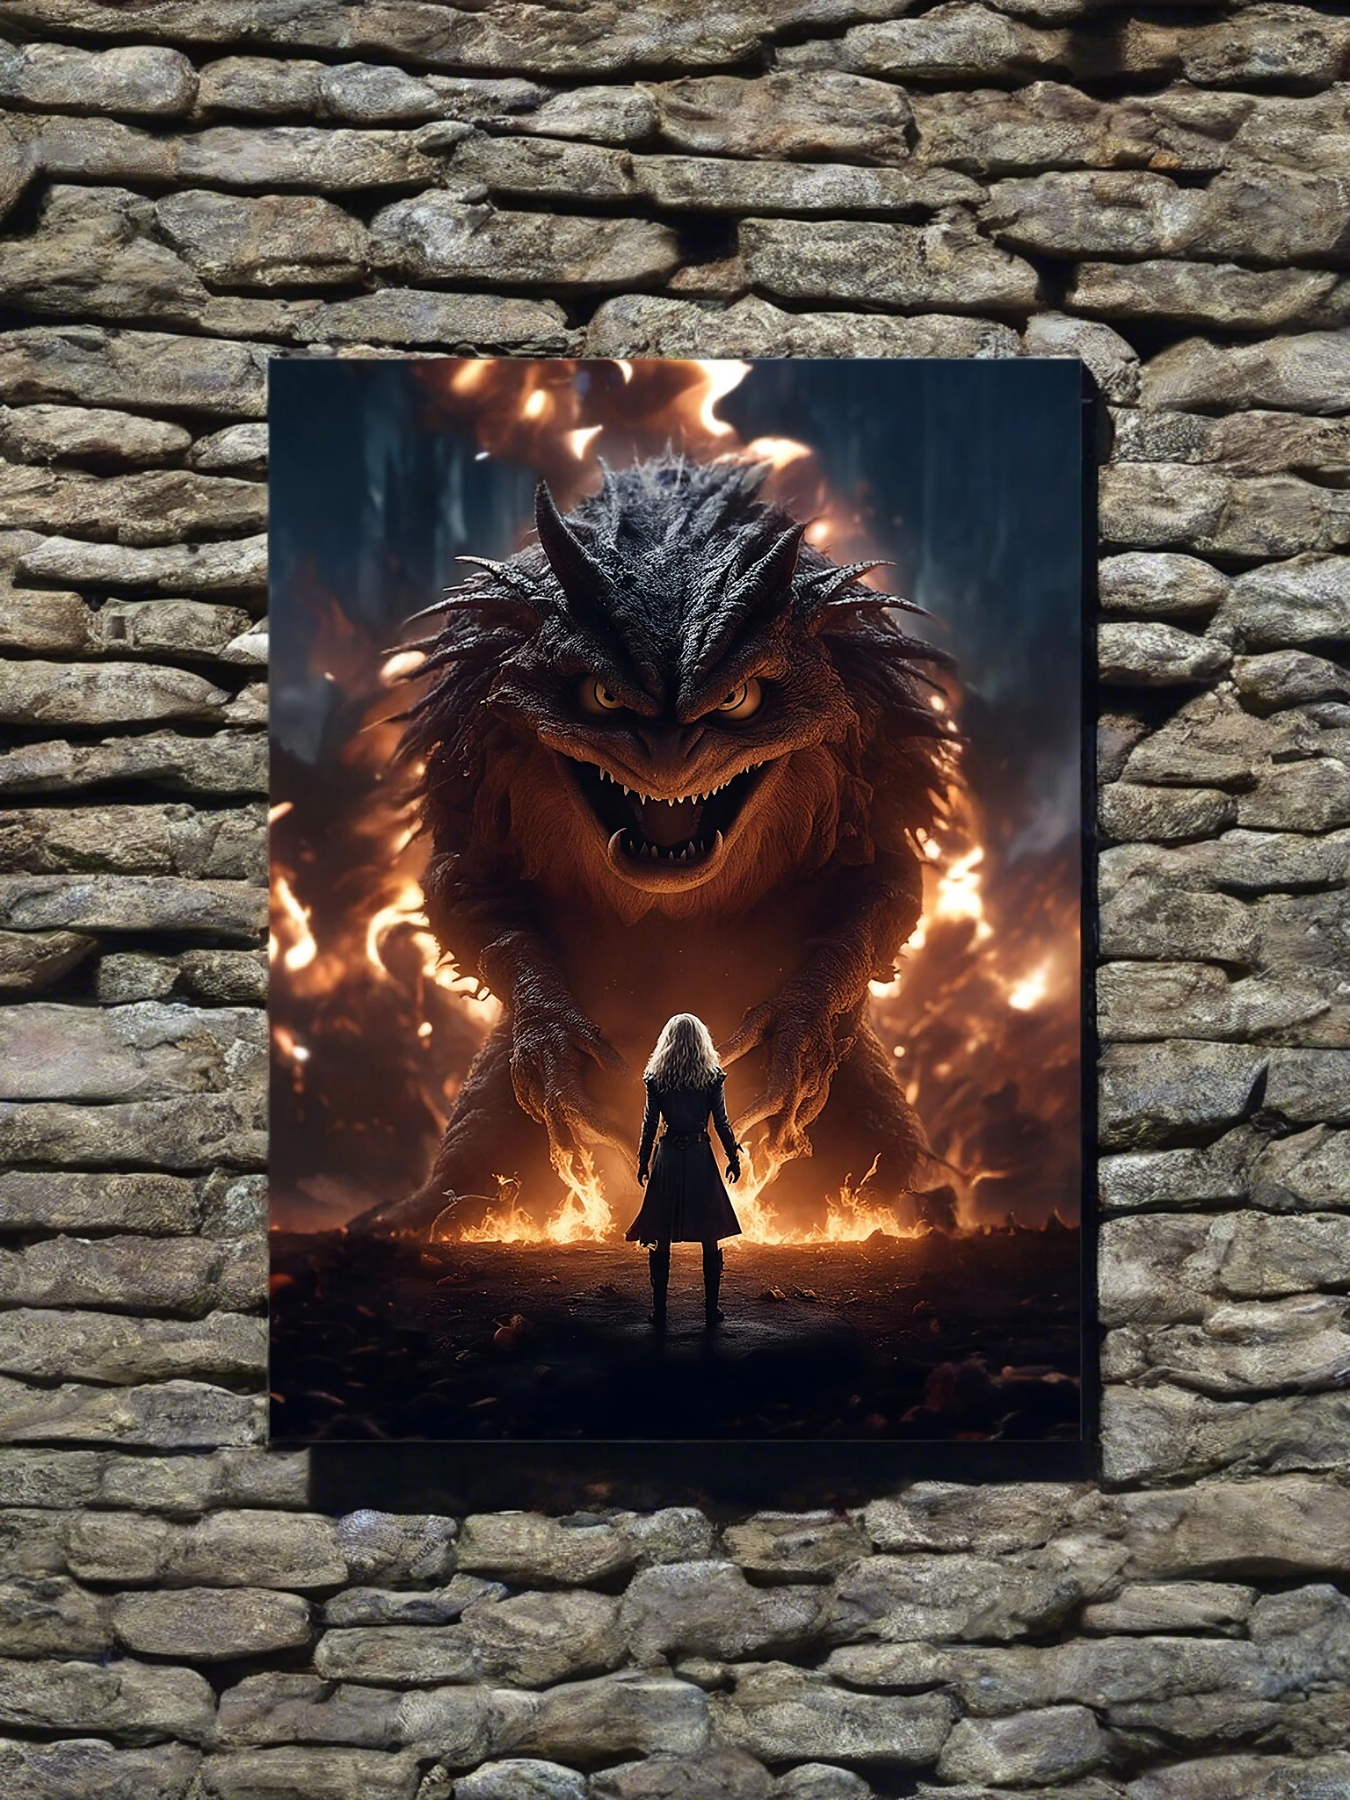 Fight against a huge fire monster dark fantasy mini photo poster - 27x20 cm 2